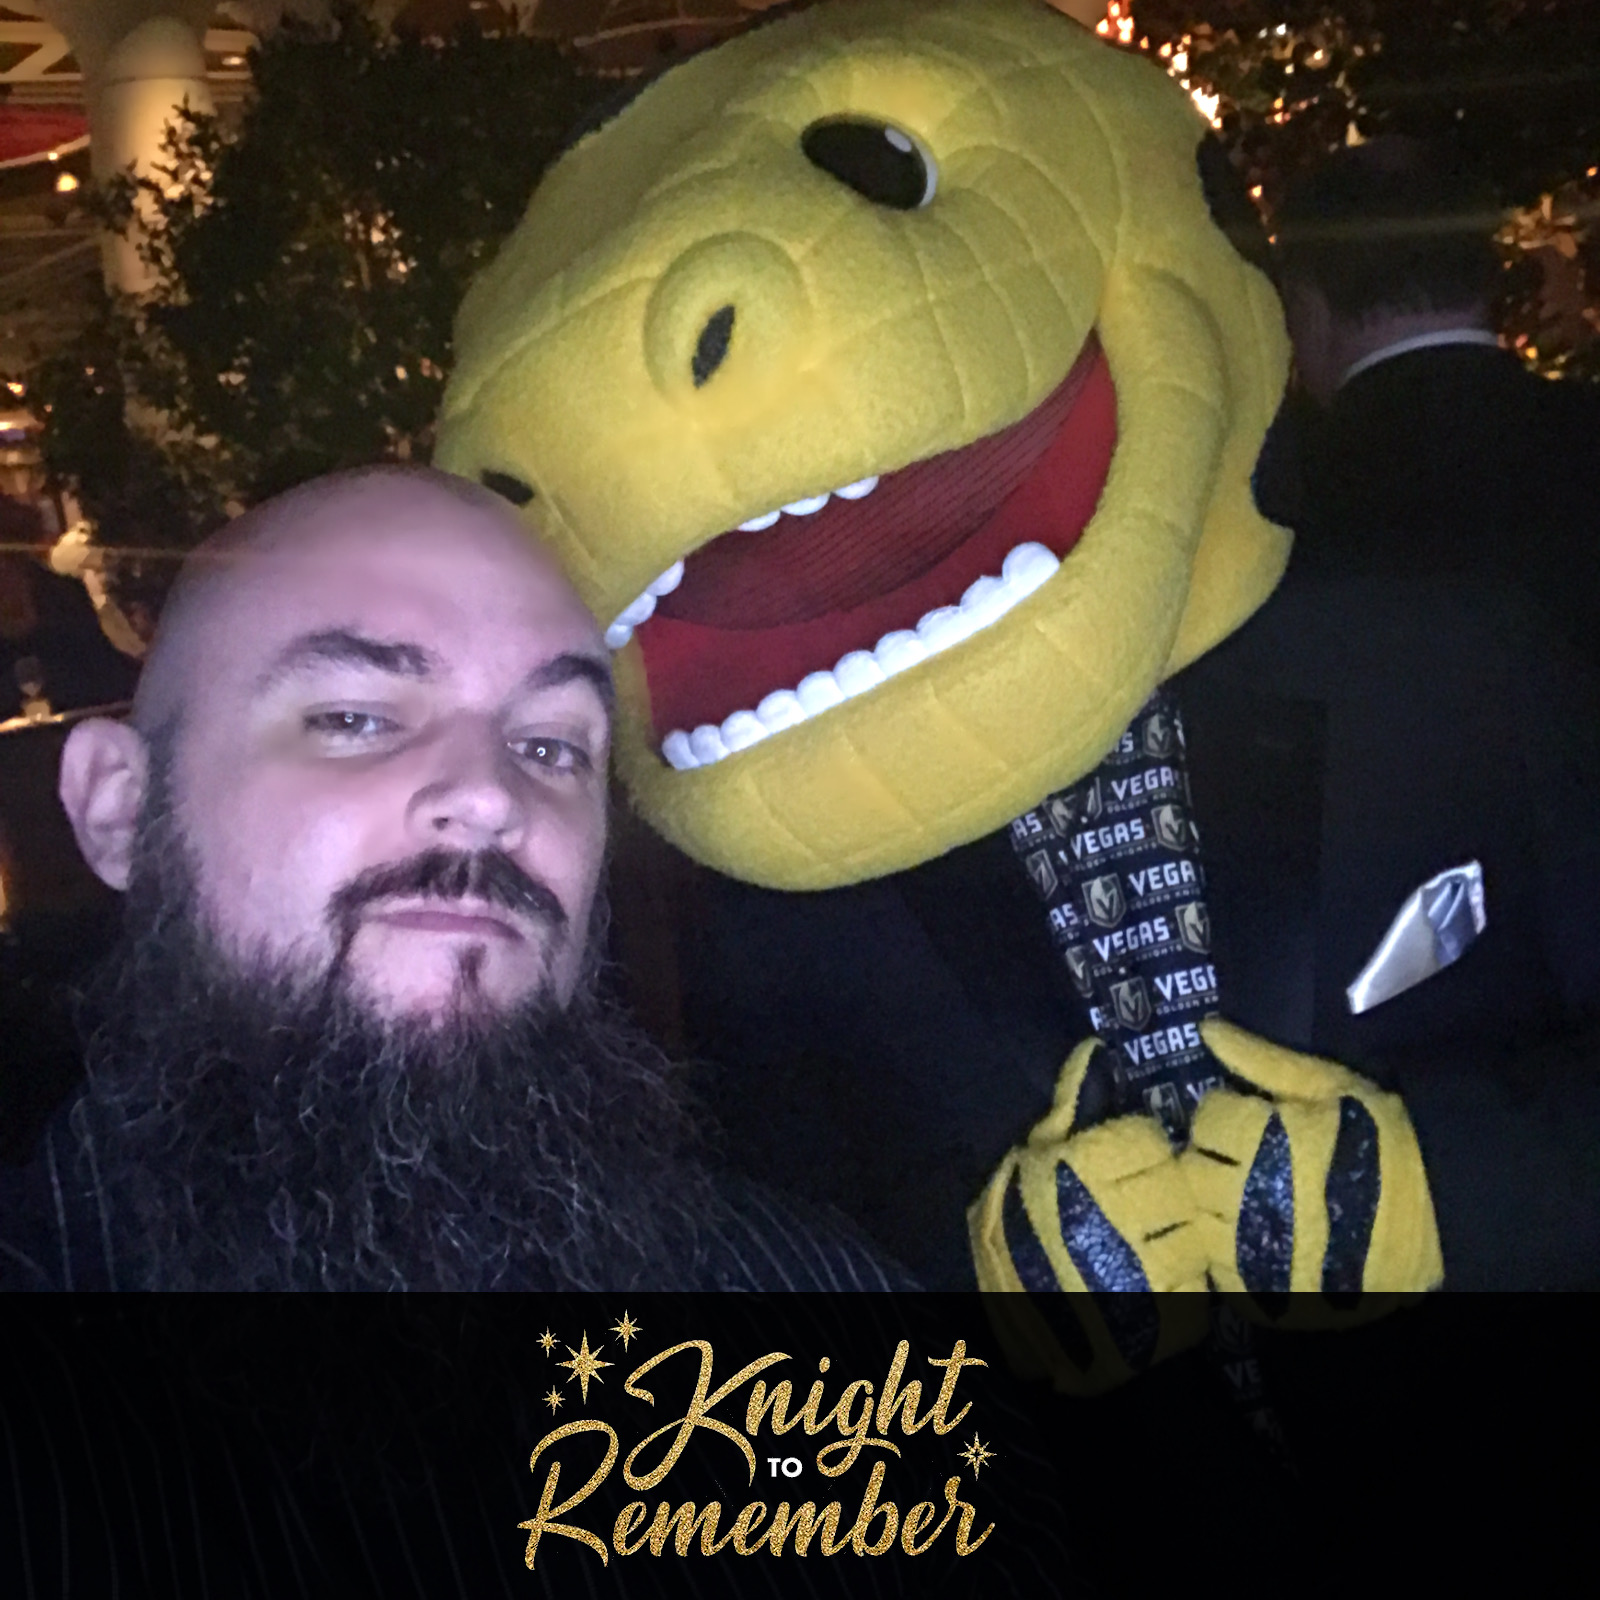 Vegas knights mascot dinosaur with bearded man